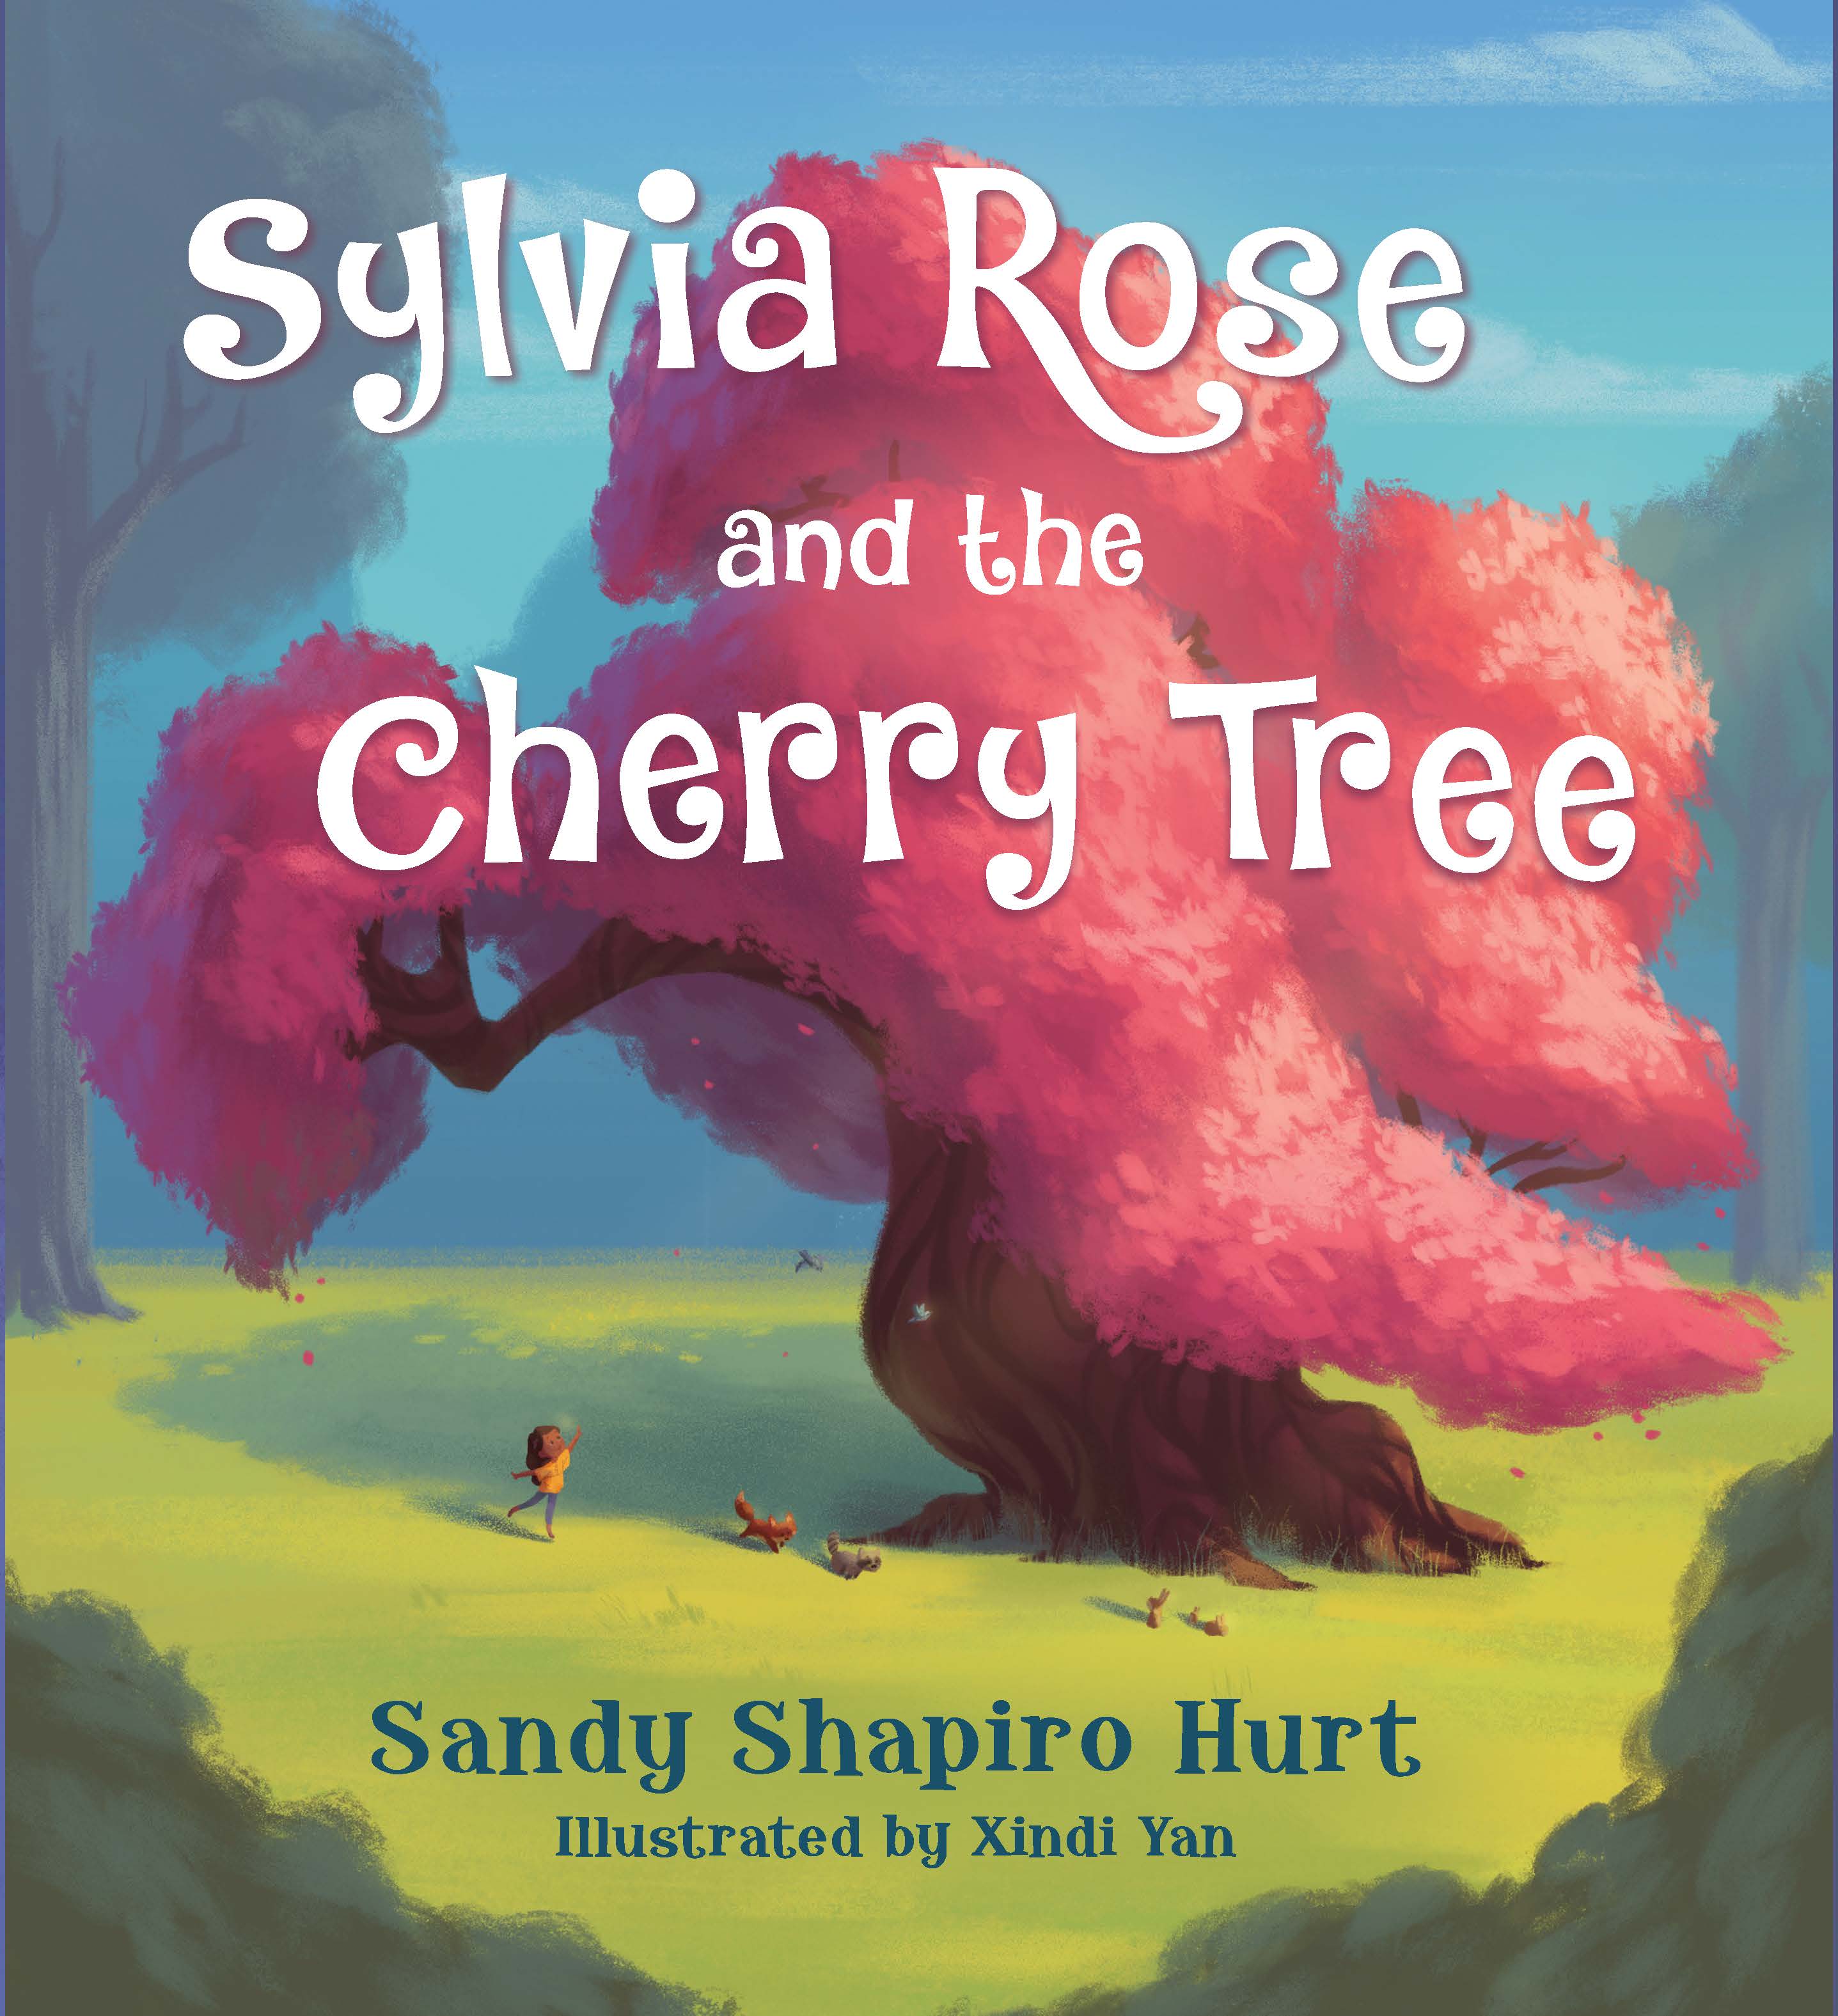 Sunday Story Time with Sandy Shapiro-Hurt & Xindi Yan (Author & Illustrator of Sylvia Rose and the Cherry Tree)